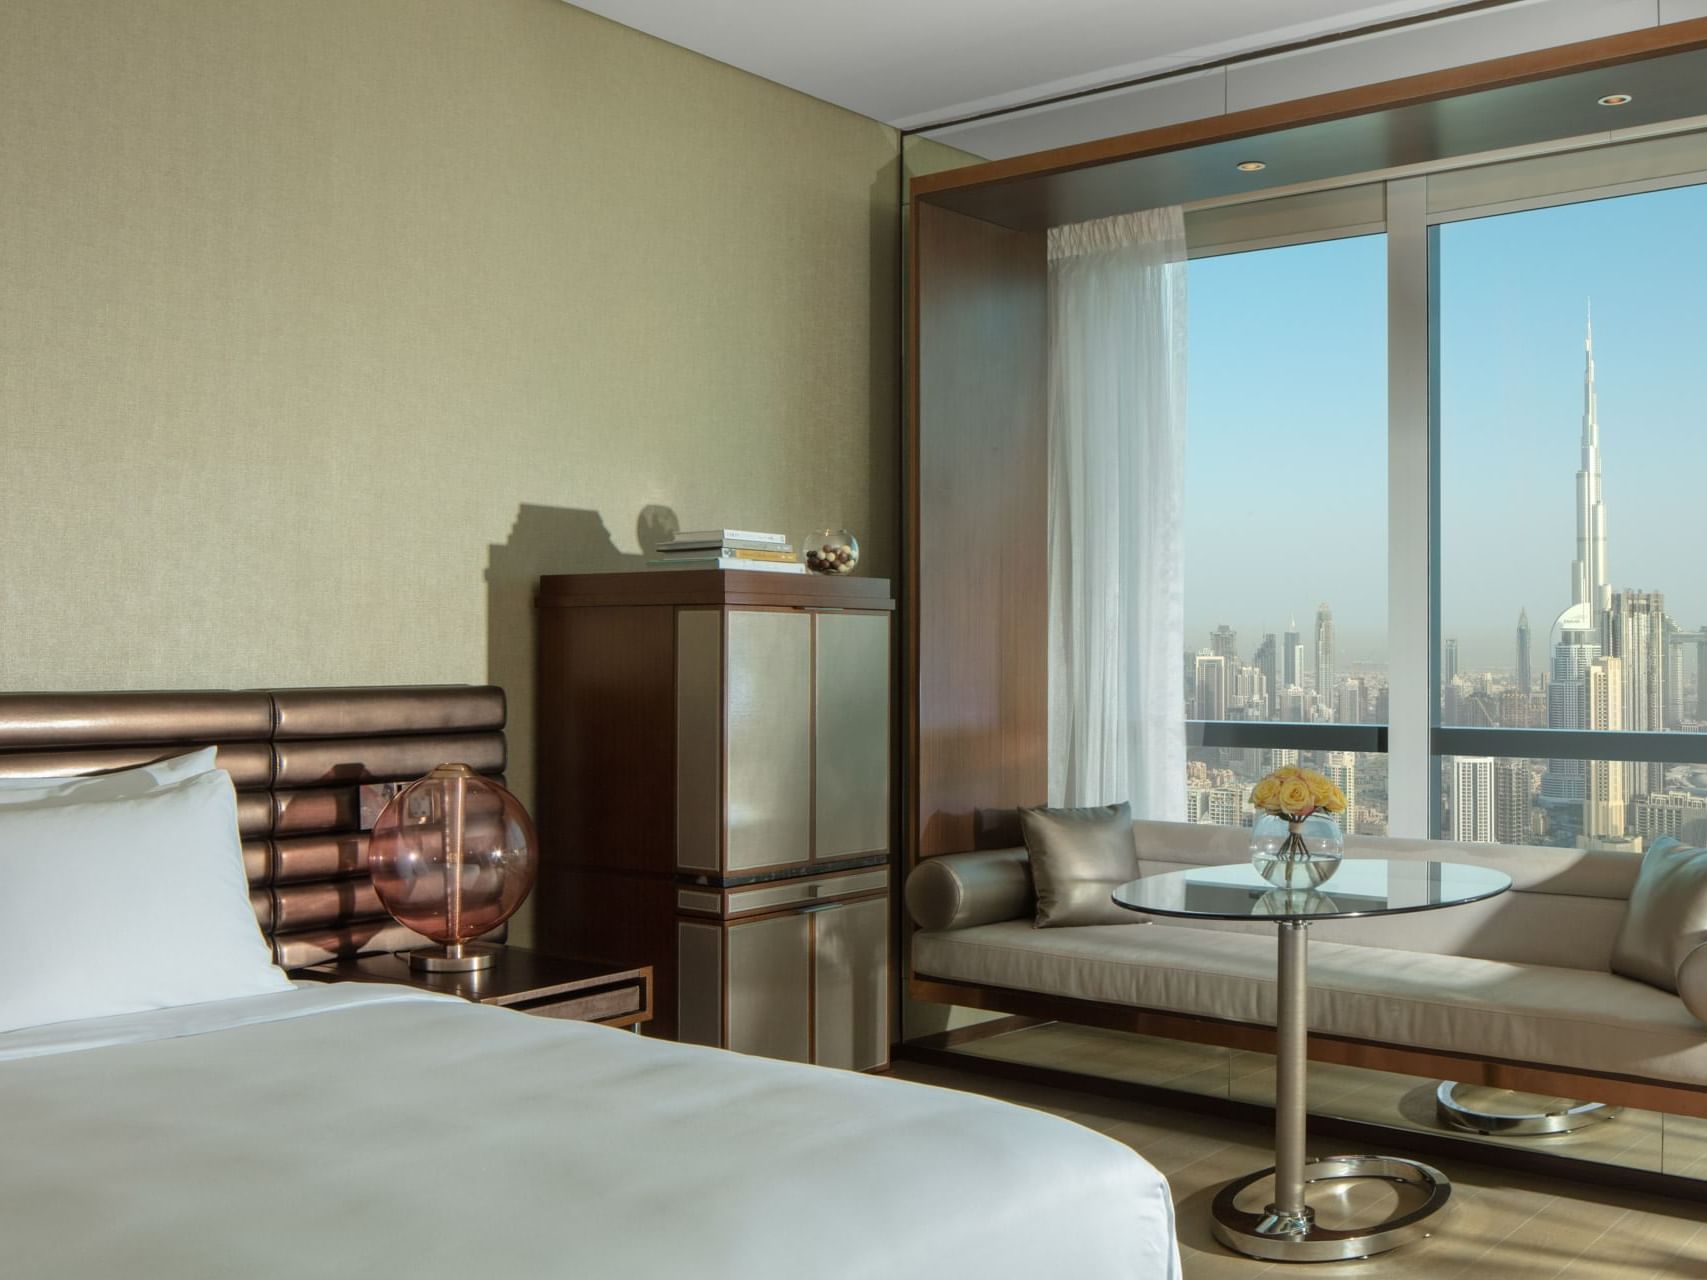 Interior of Scene Room with city views at Paramount Hotel Dubai